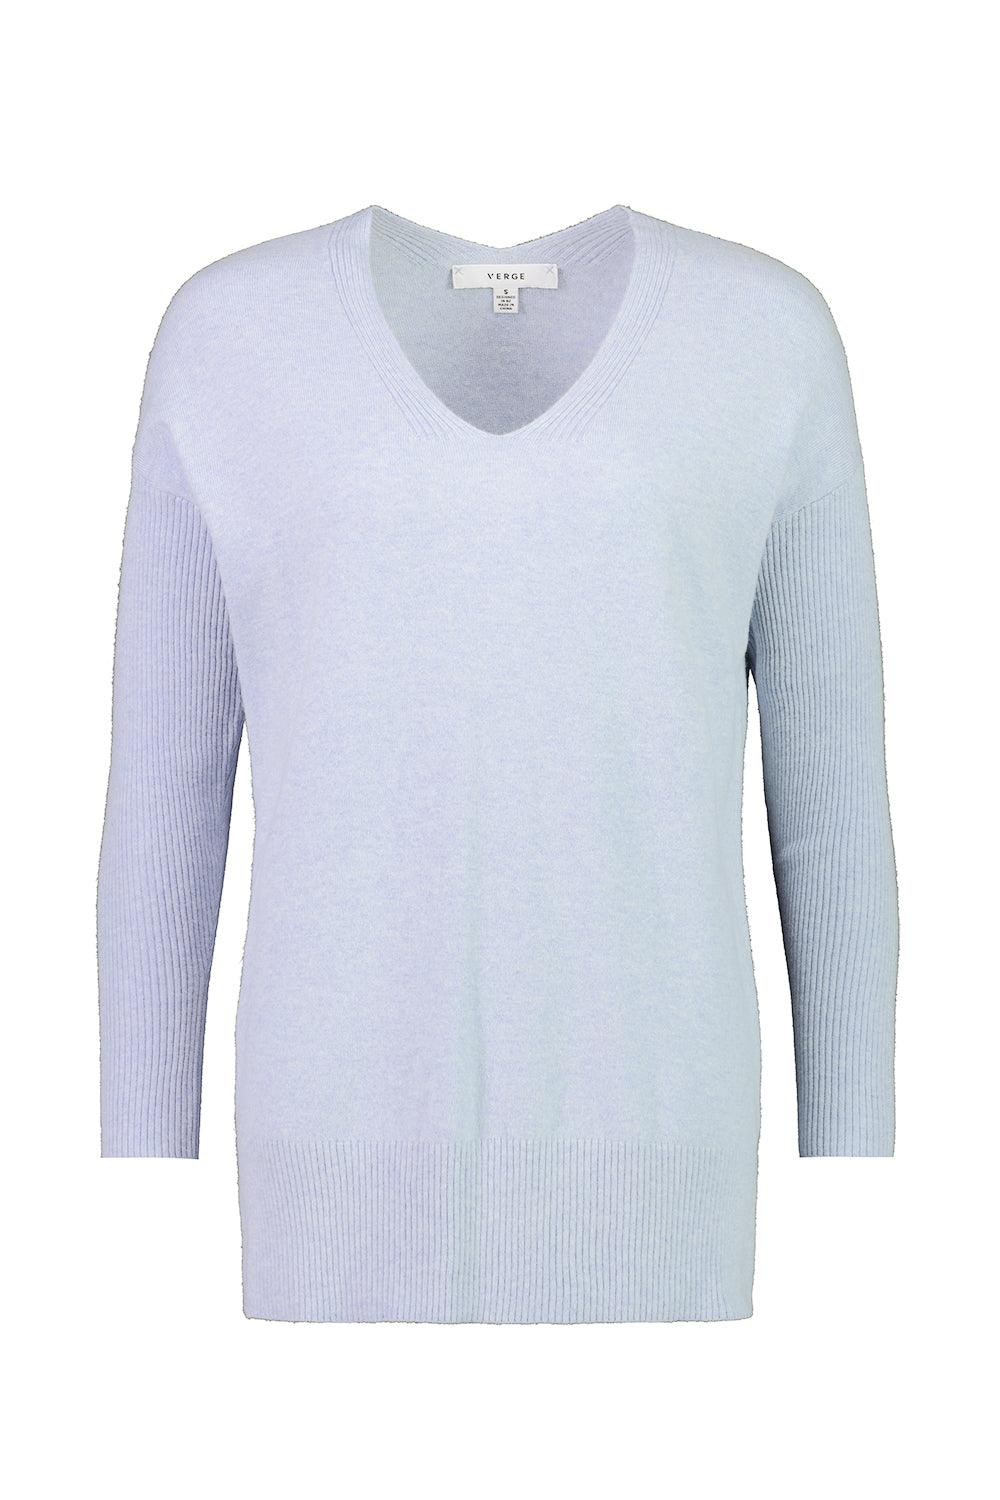 Newbury Sweater - Celestial Blue - Sweater VERGE